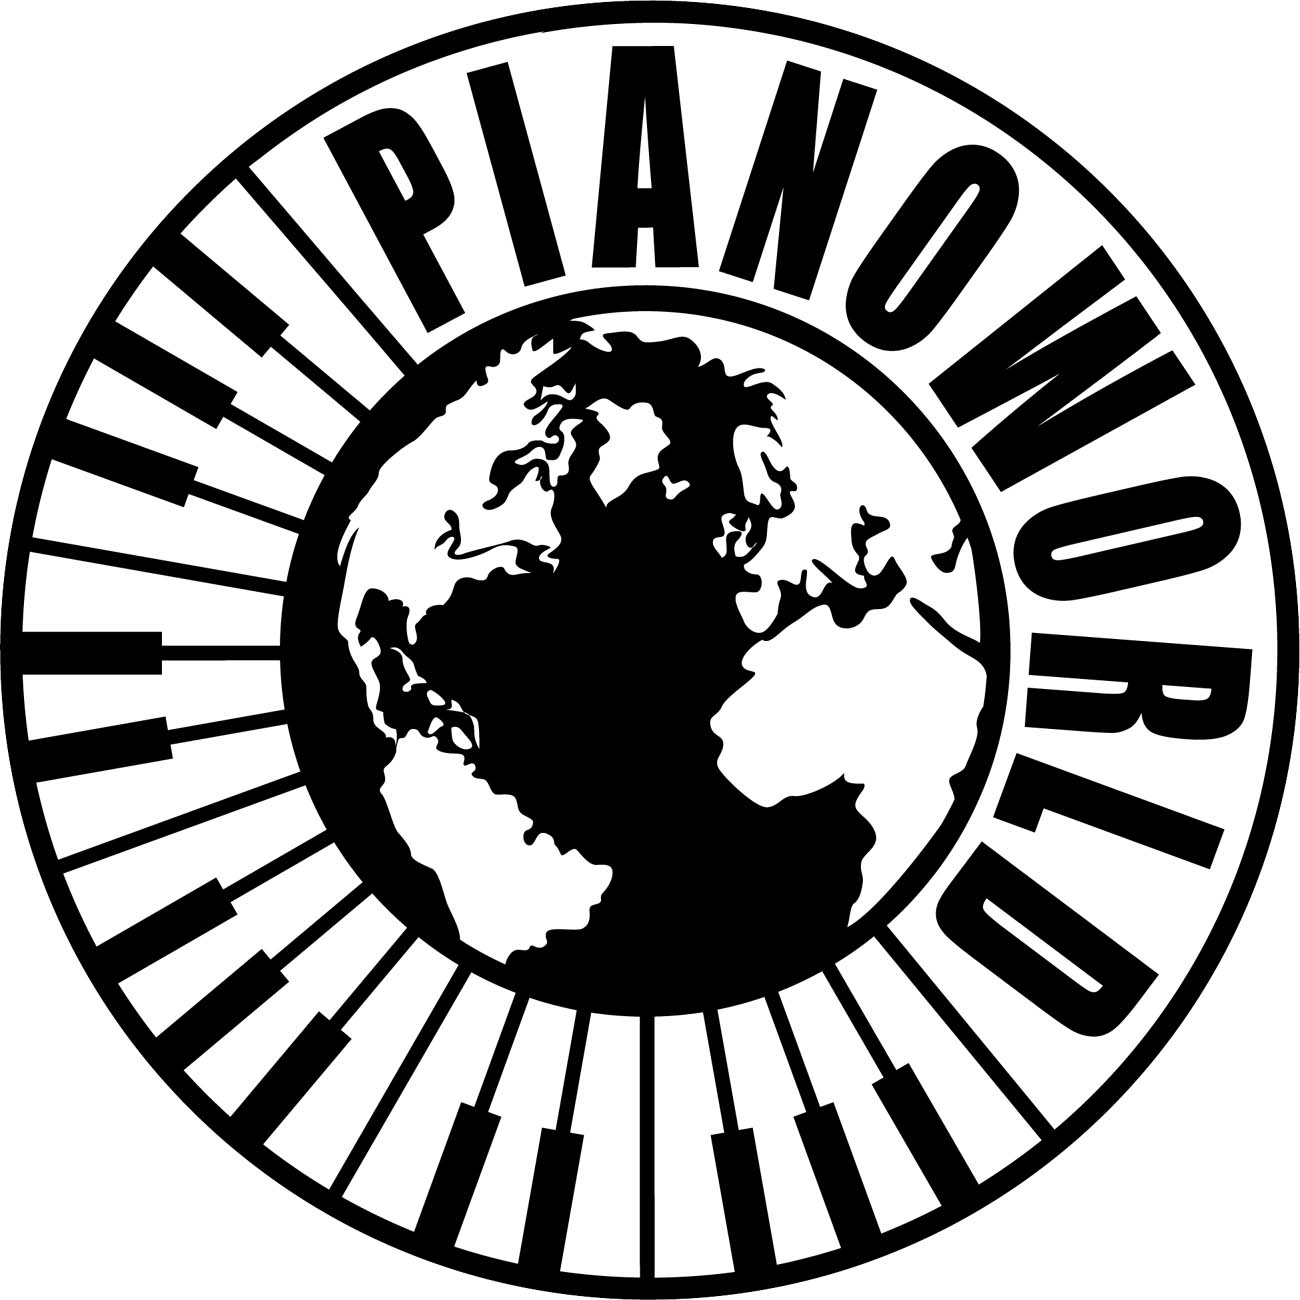 Piano World